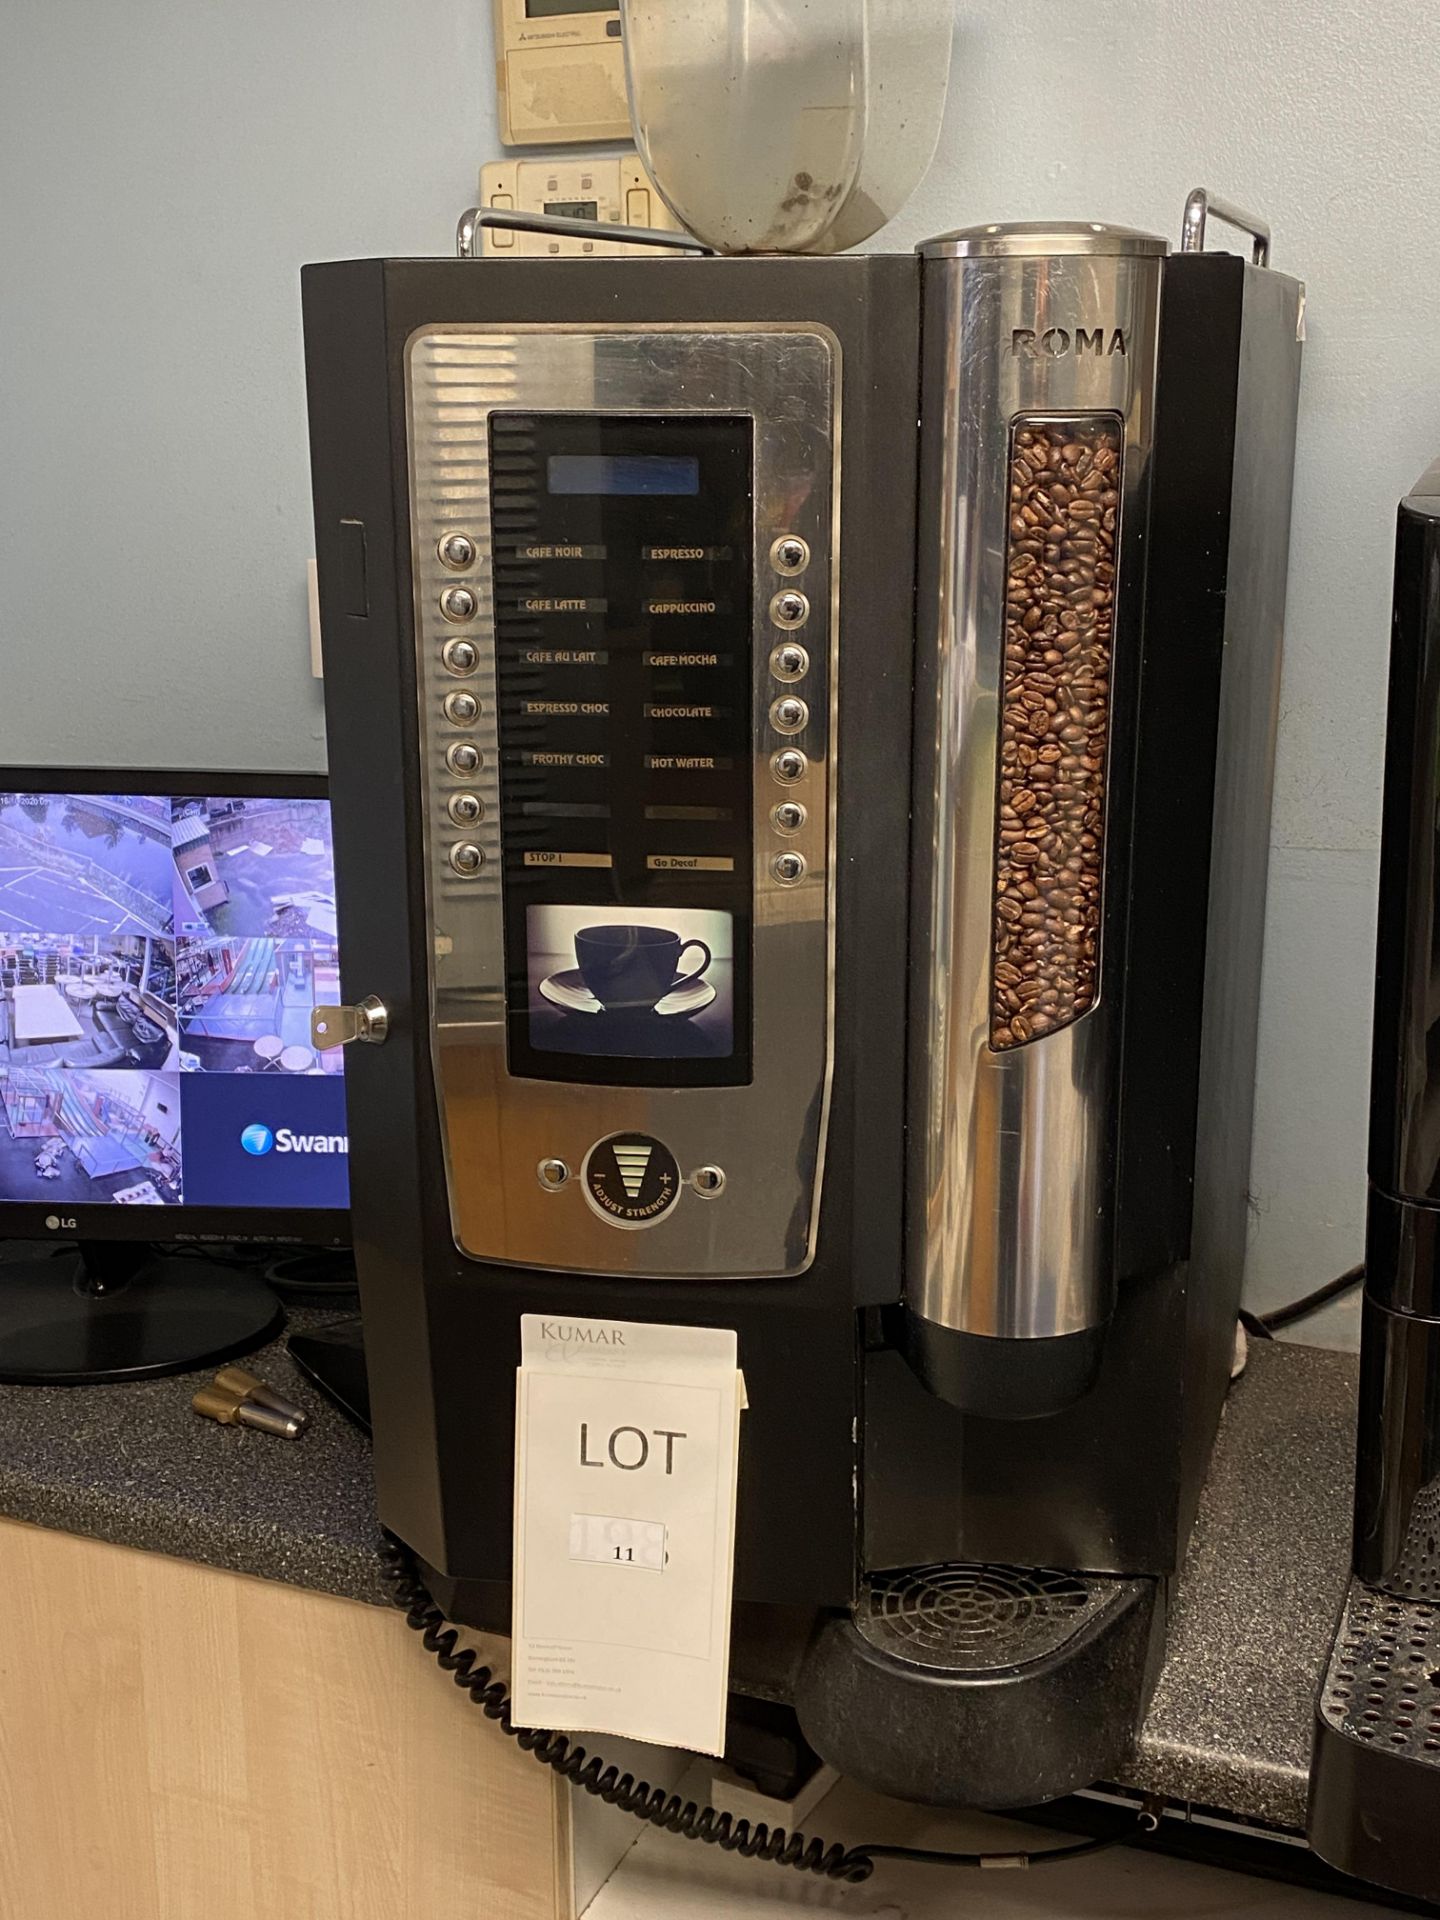 Roma Coffee Machine (Spares or Repair) - Image 2 of 4